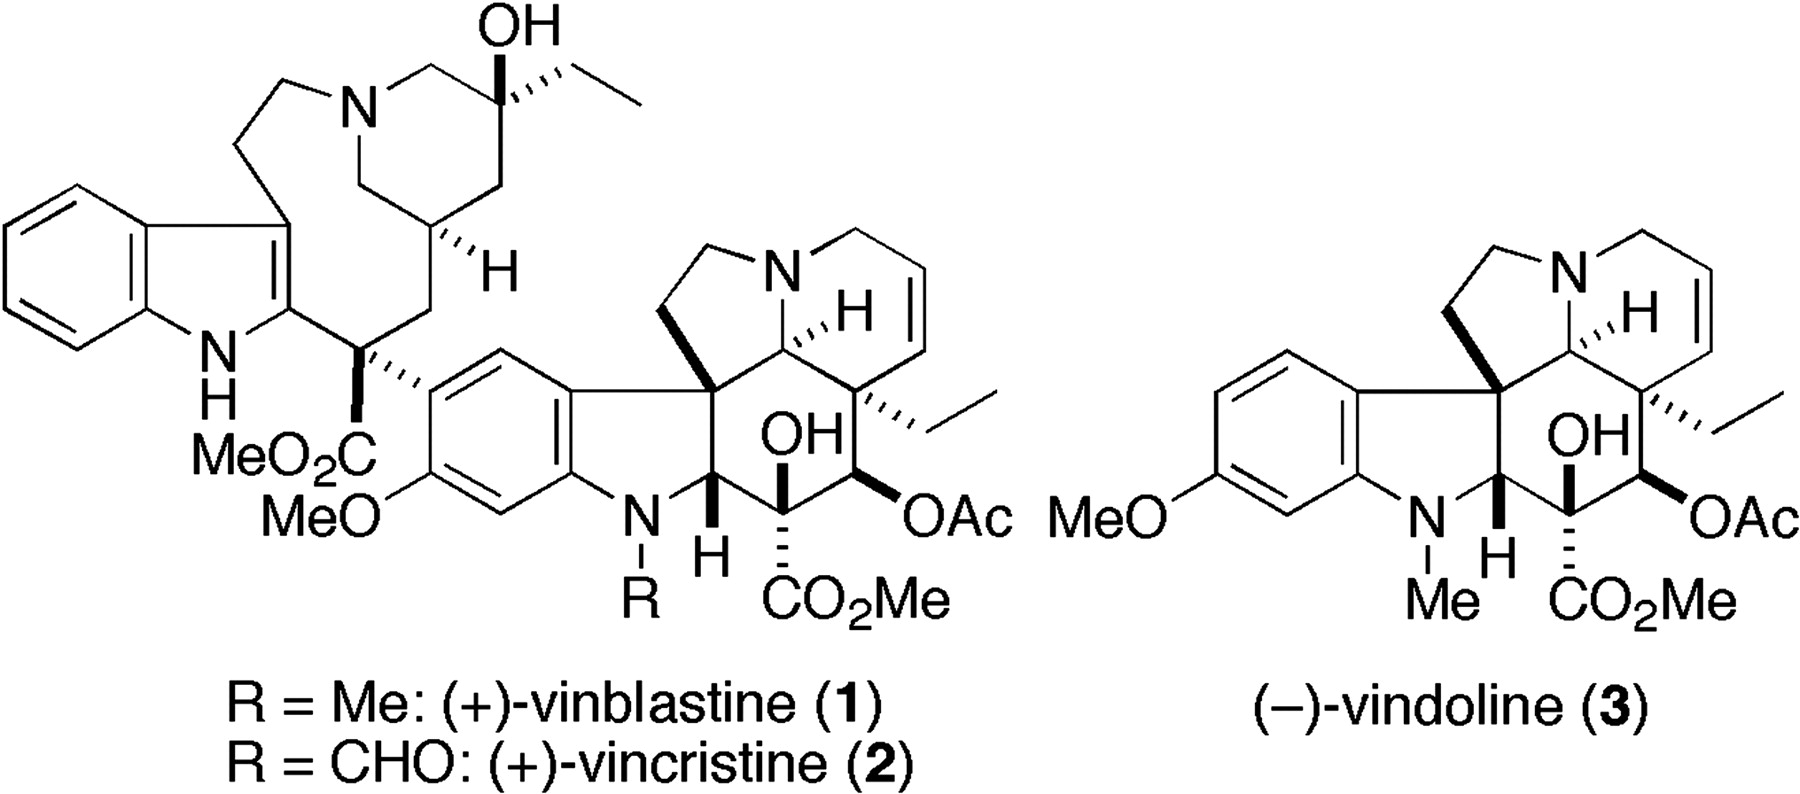 Indole containing vinca alkaloids - Vinblastine, vincristine and vindoline.